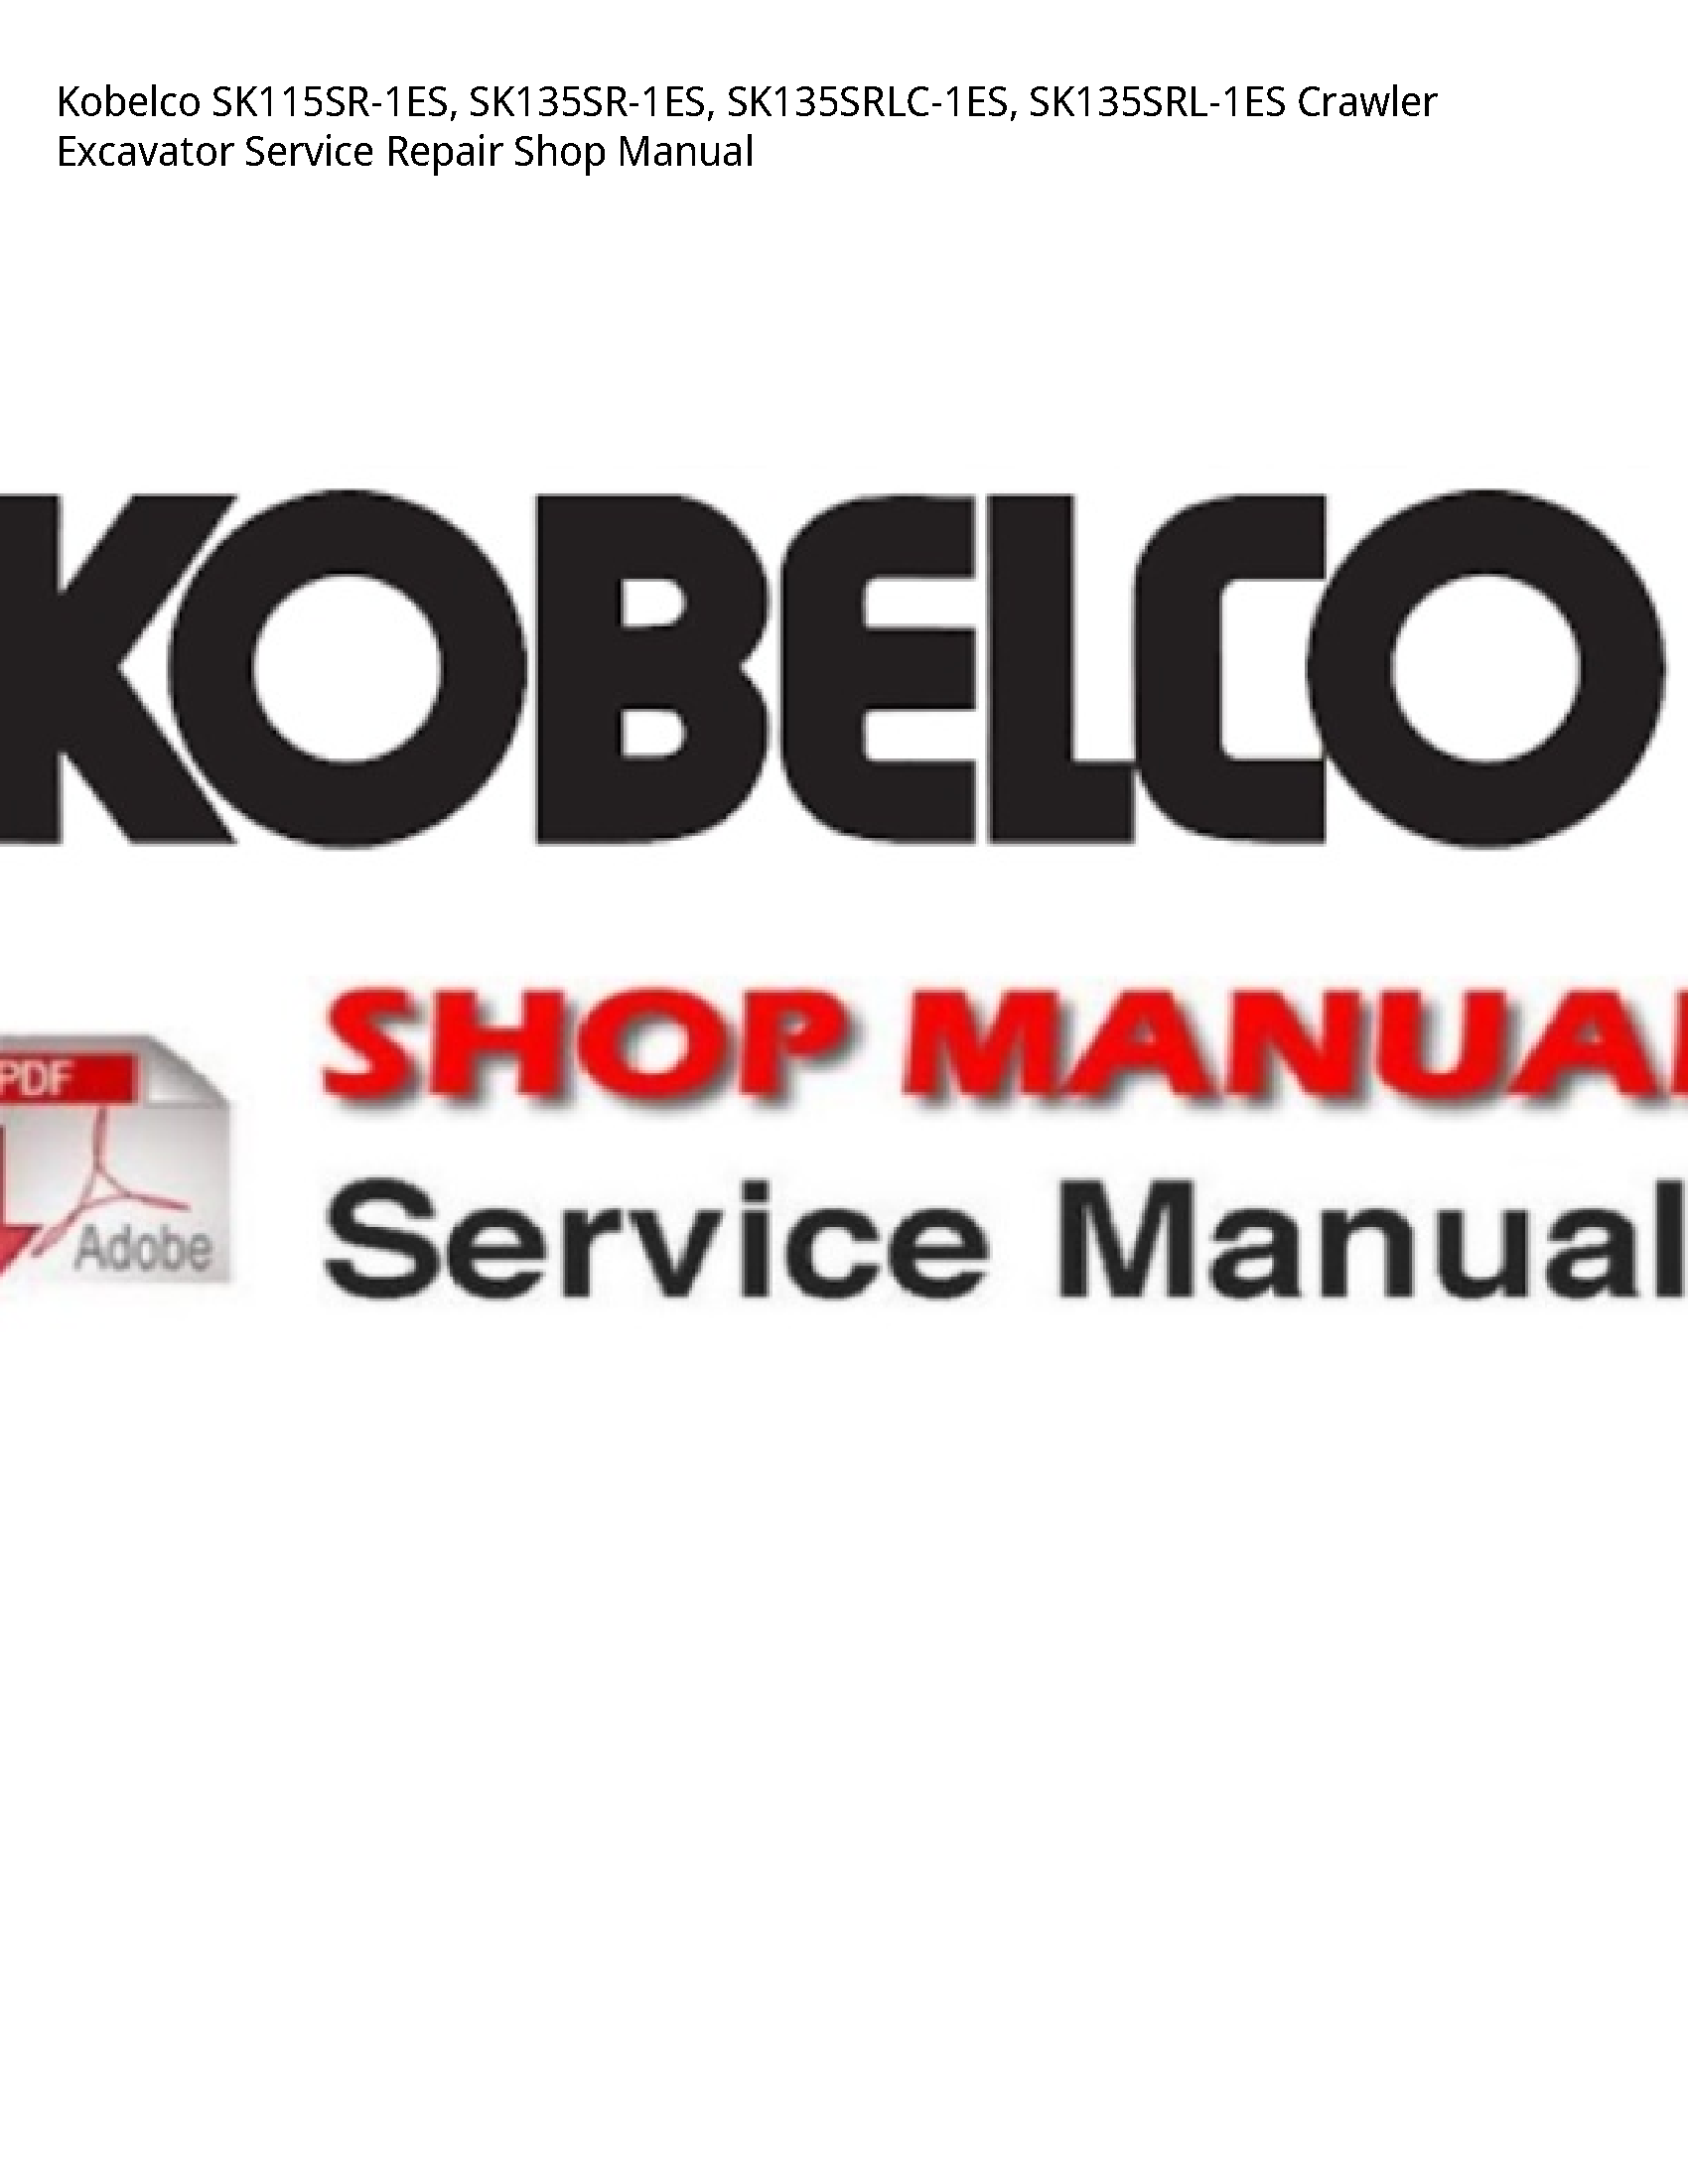 Kobelco SK115SR-1ES Crawler Excavator manual